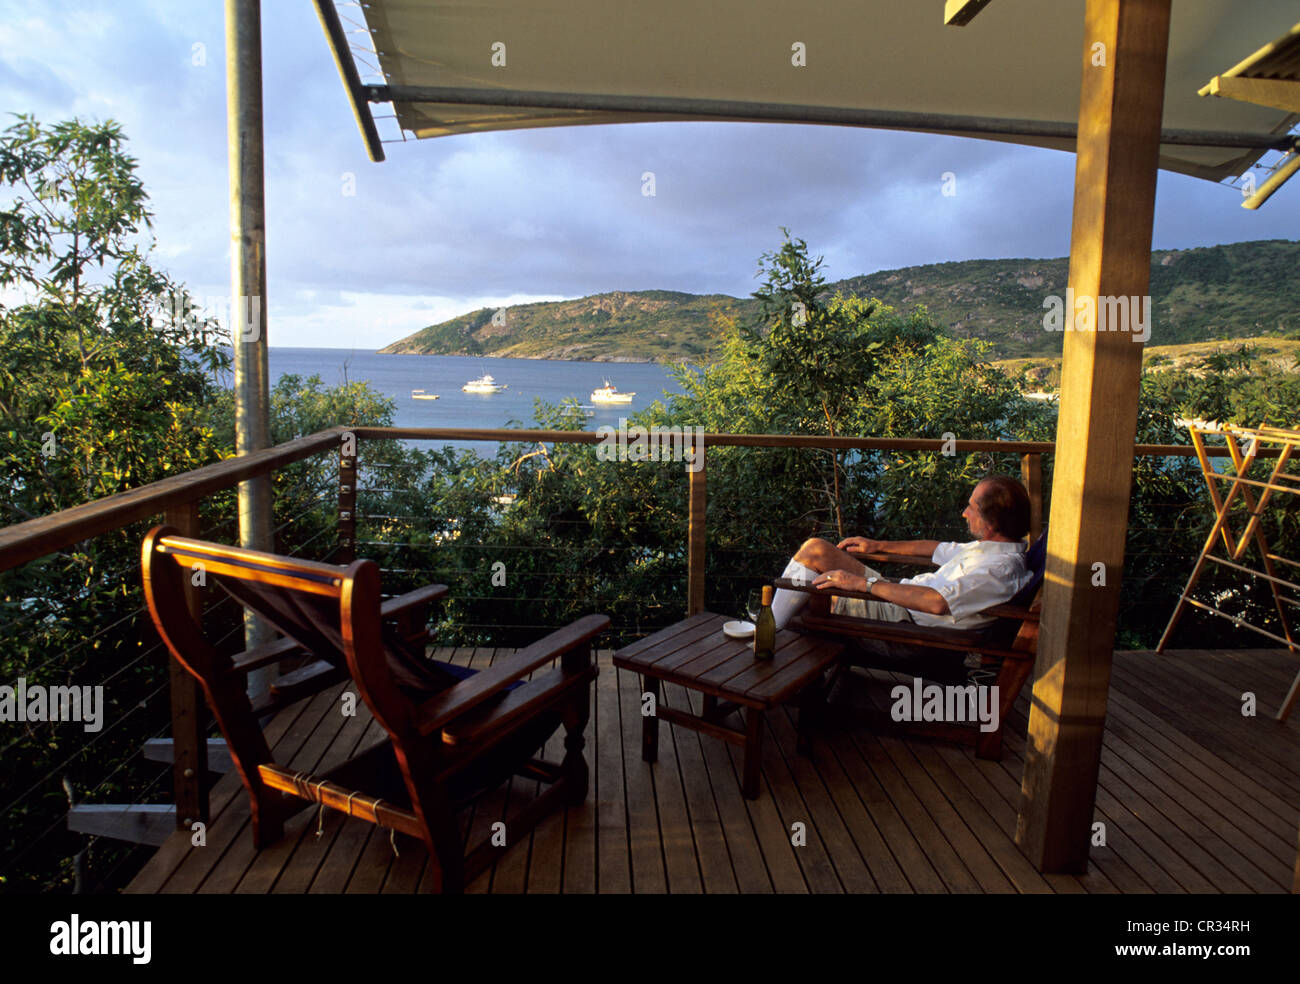 Australia, Queensland, terrazza di una suite del Lizard Island Resort si affaccia su una baia di Lizard Island Foto Stock